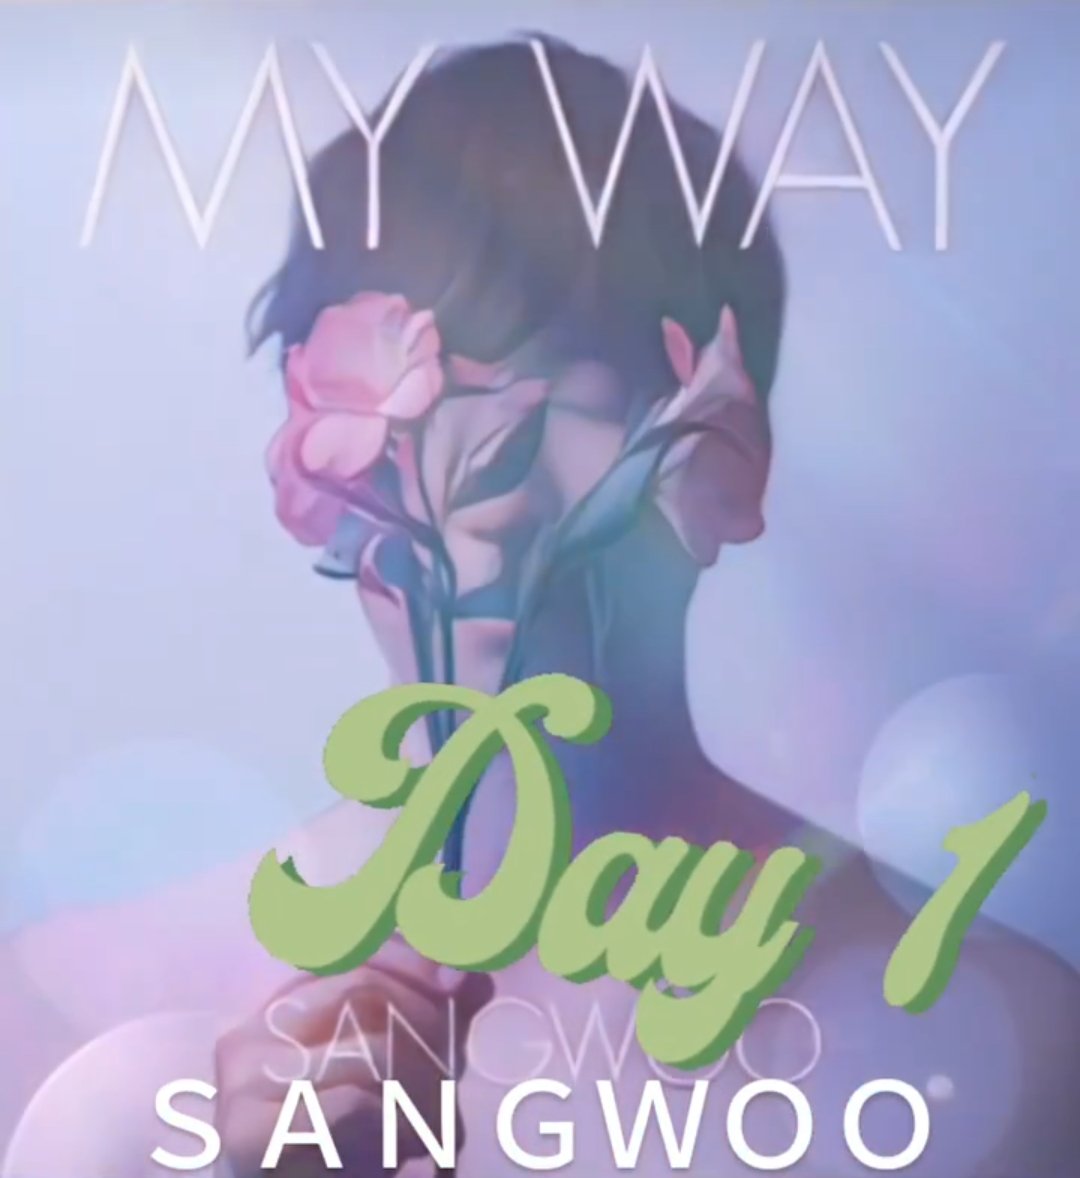 ＳＡＮＧＷＯＯ
『MY WAY』
6月10日
リリースイベント
Day1